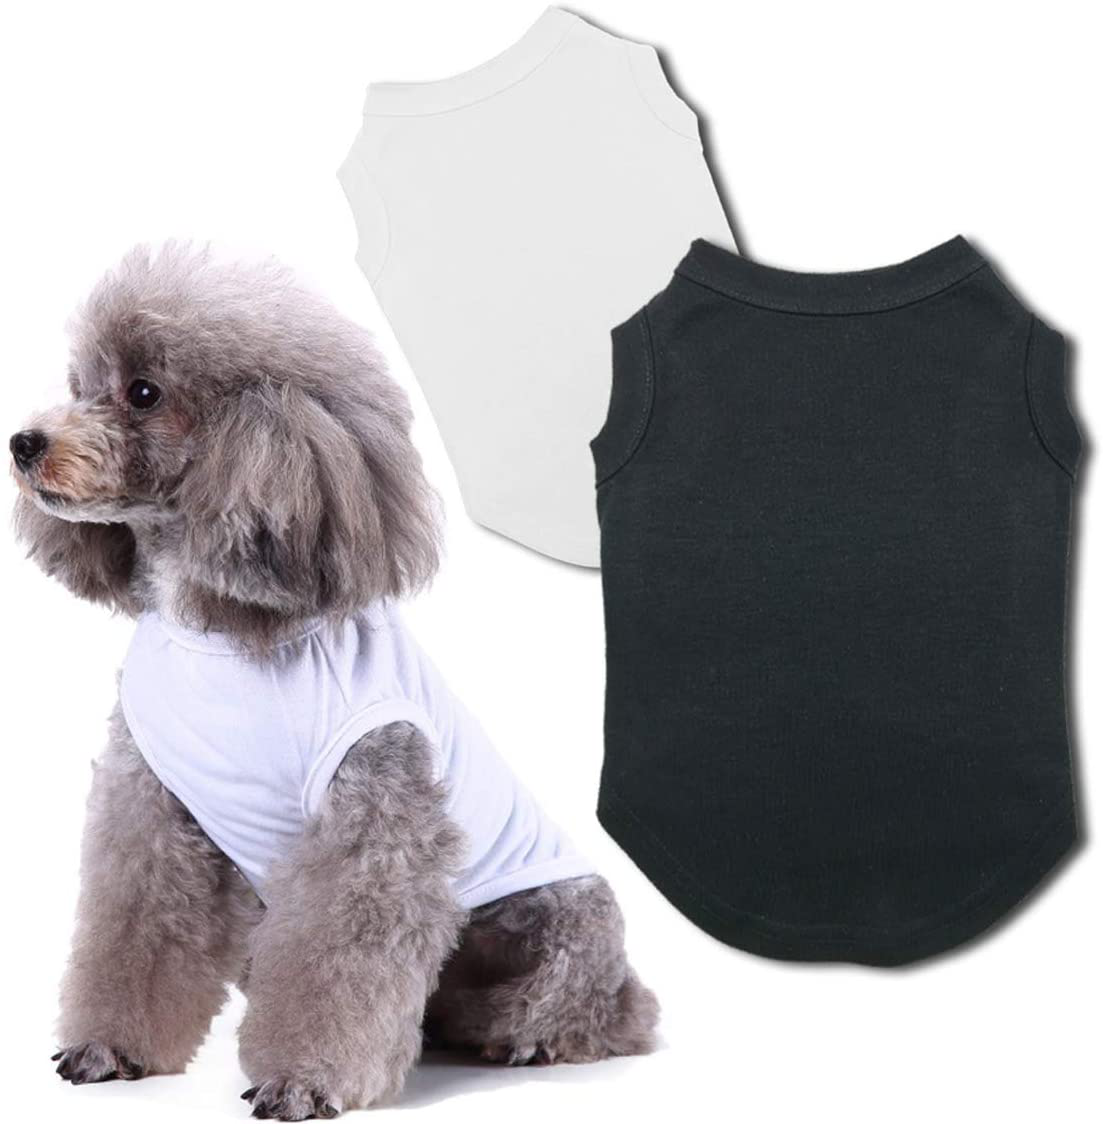 Chol&Vivi Dog Shirts Blank Clothes, 2Pcs Dog T-Shirts Apparel Fit Fot Small Extra Small Medium Large Extra Large Dog Cat, Cotton Shirts Soft and Breathable